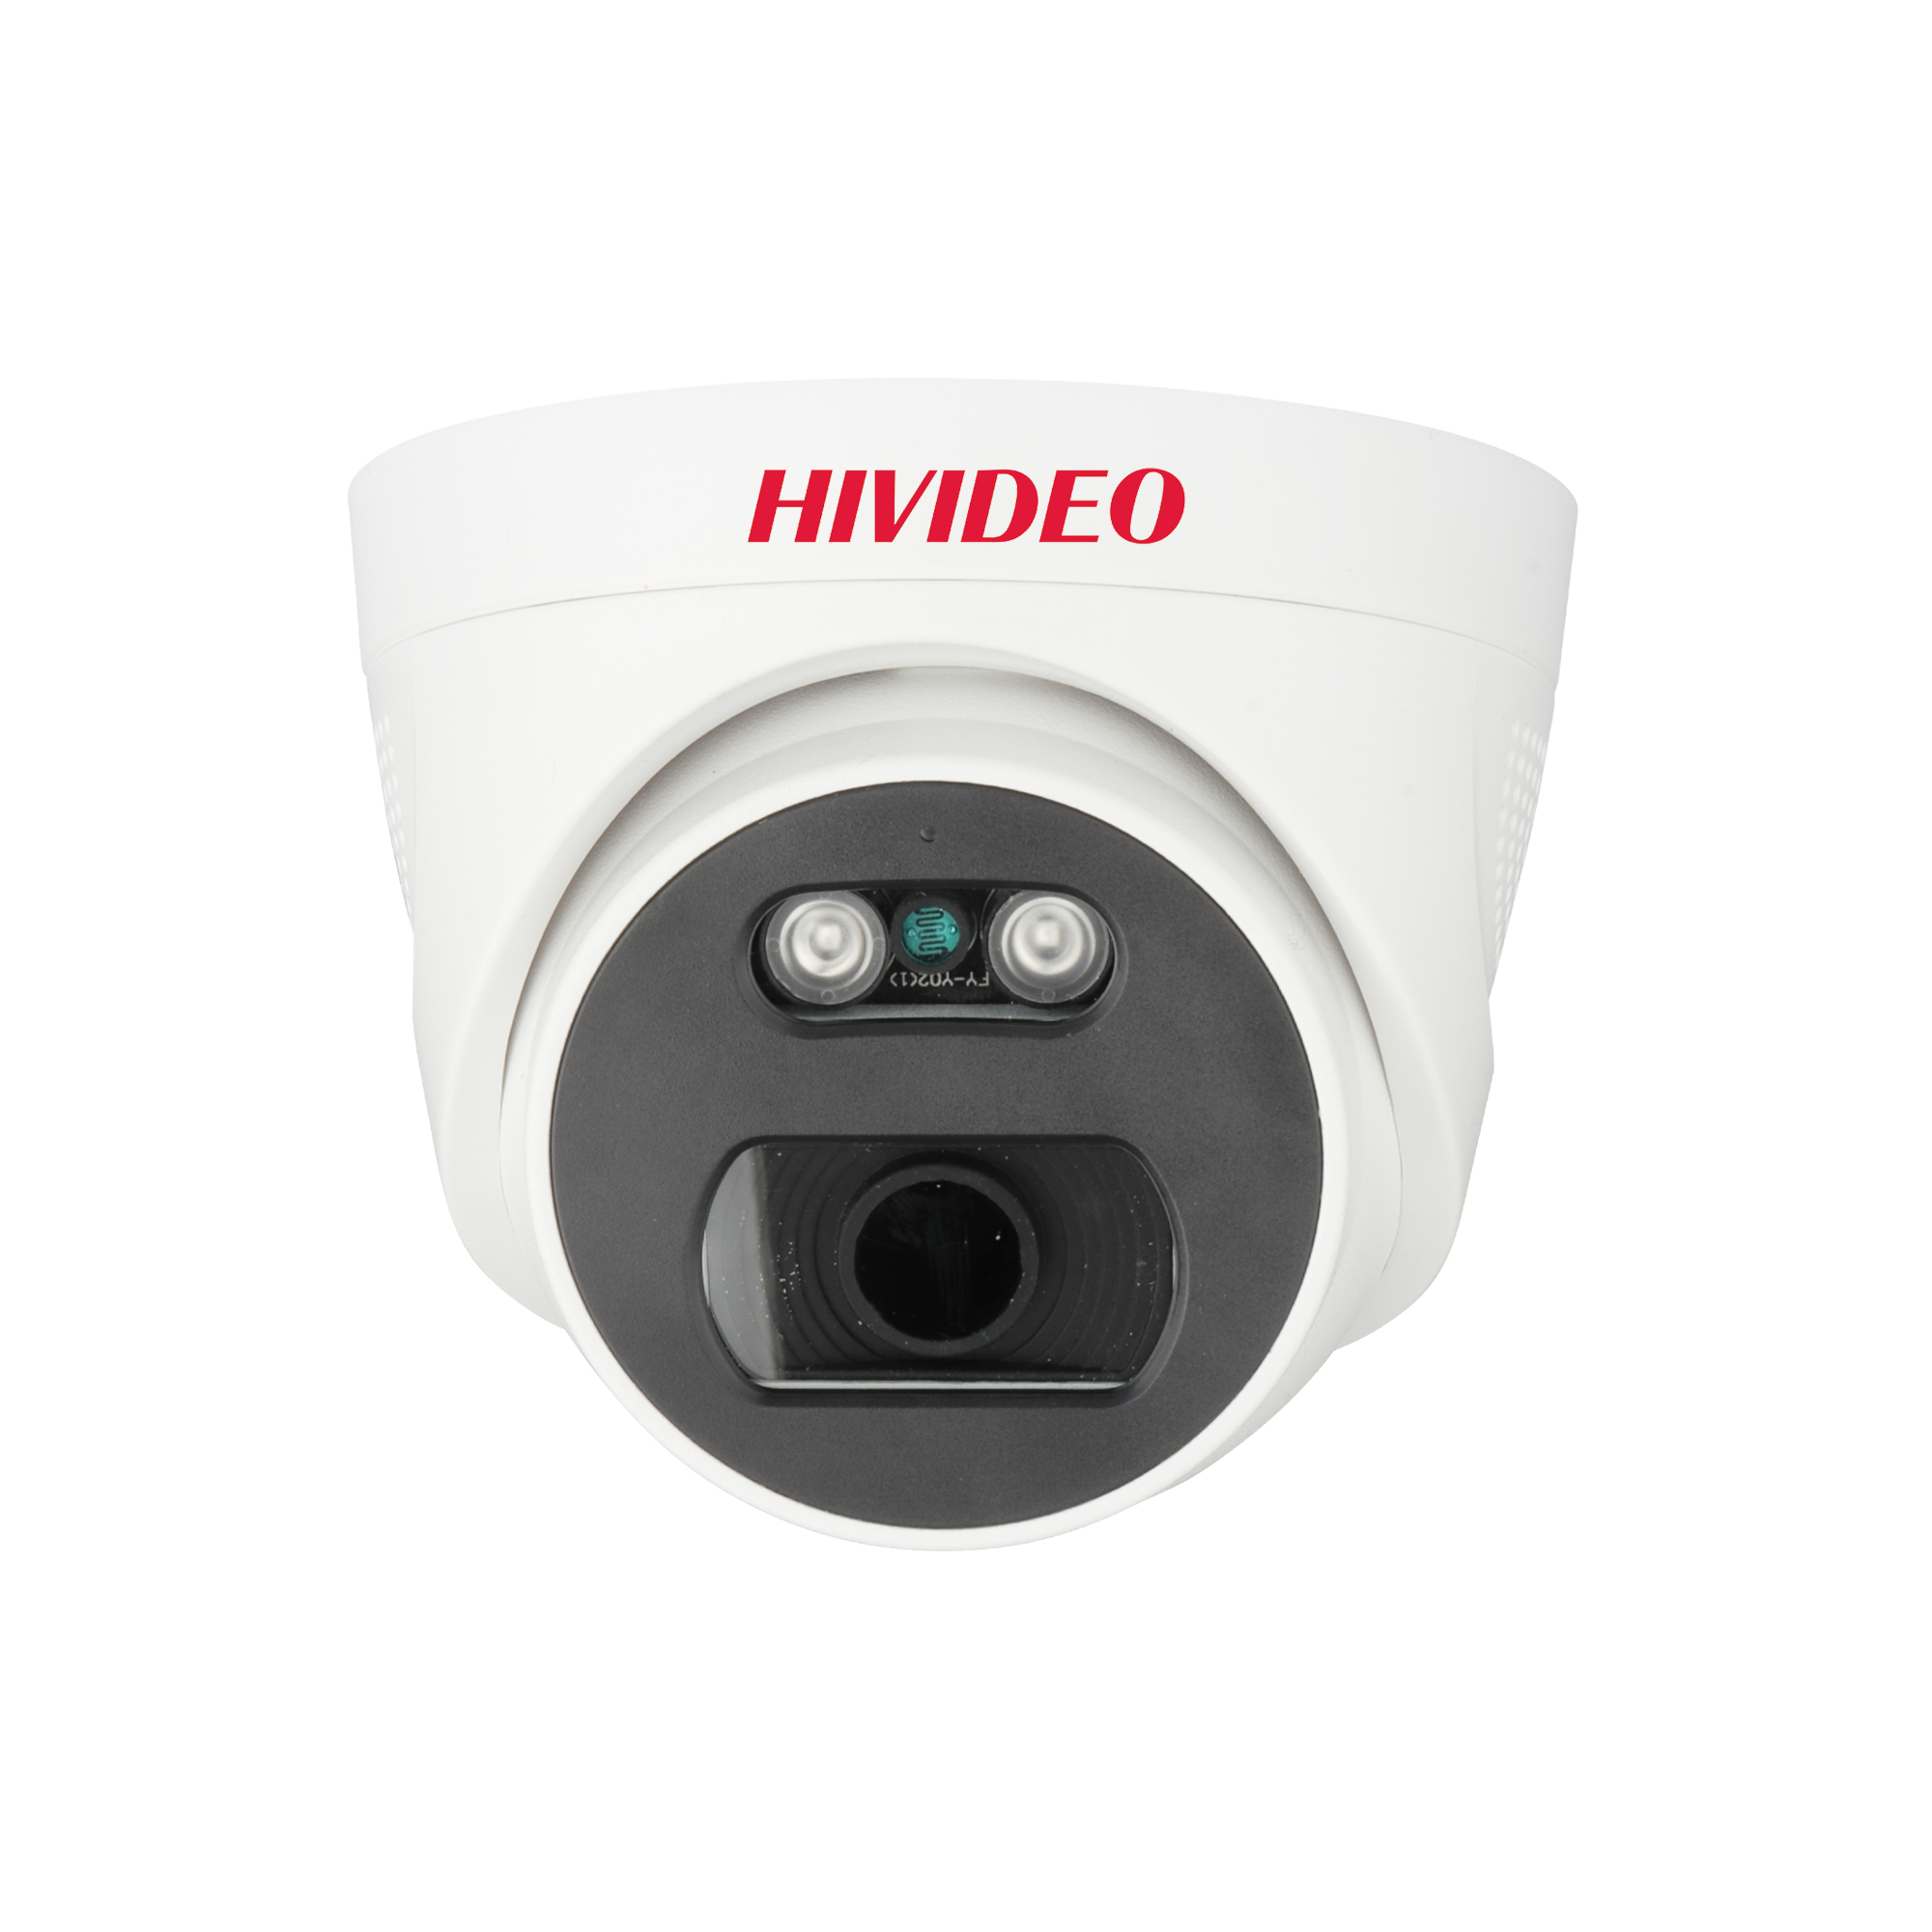 دوربین مداربسته دام HIVIDEO مدل HI-D73613